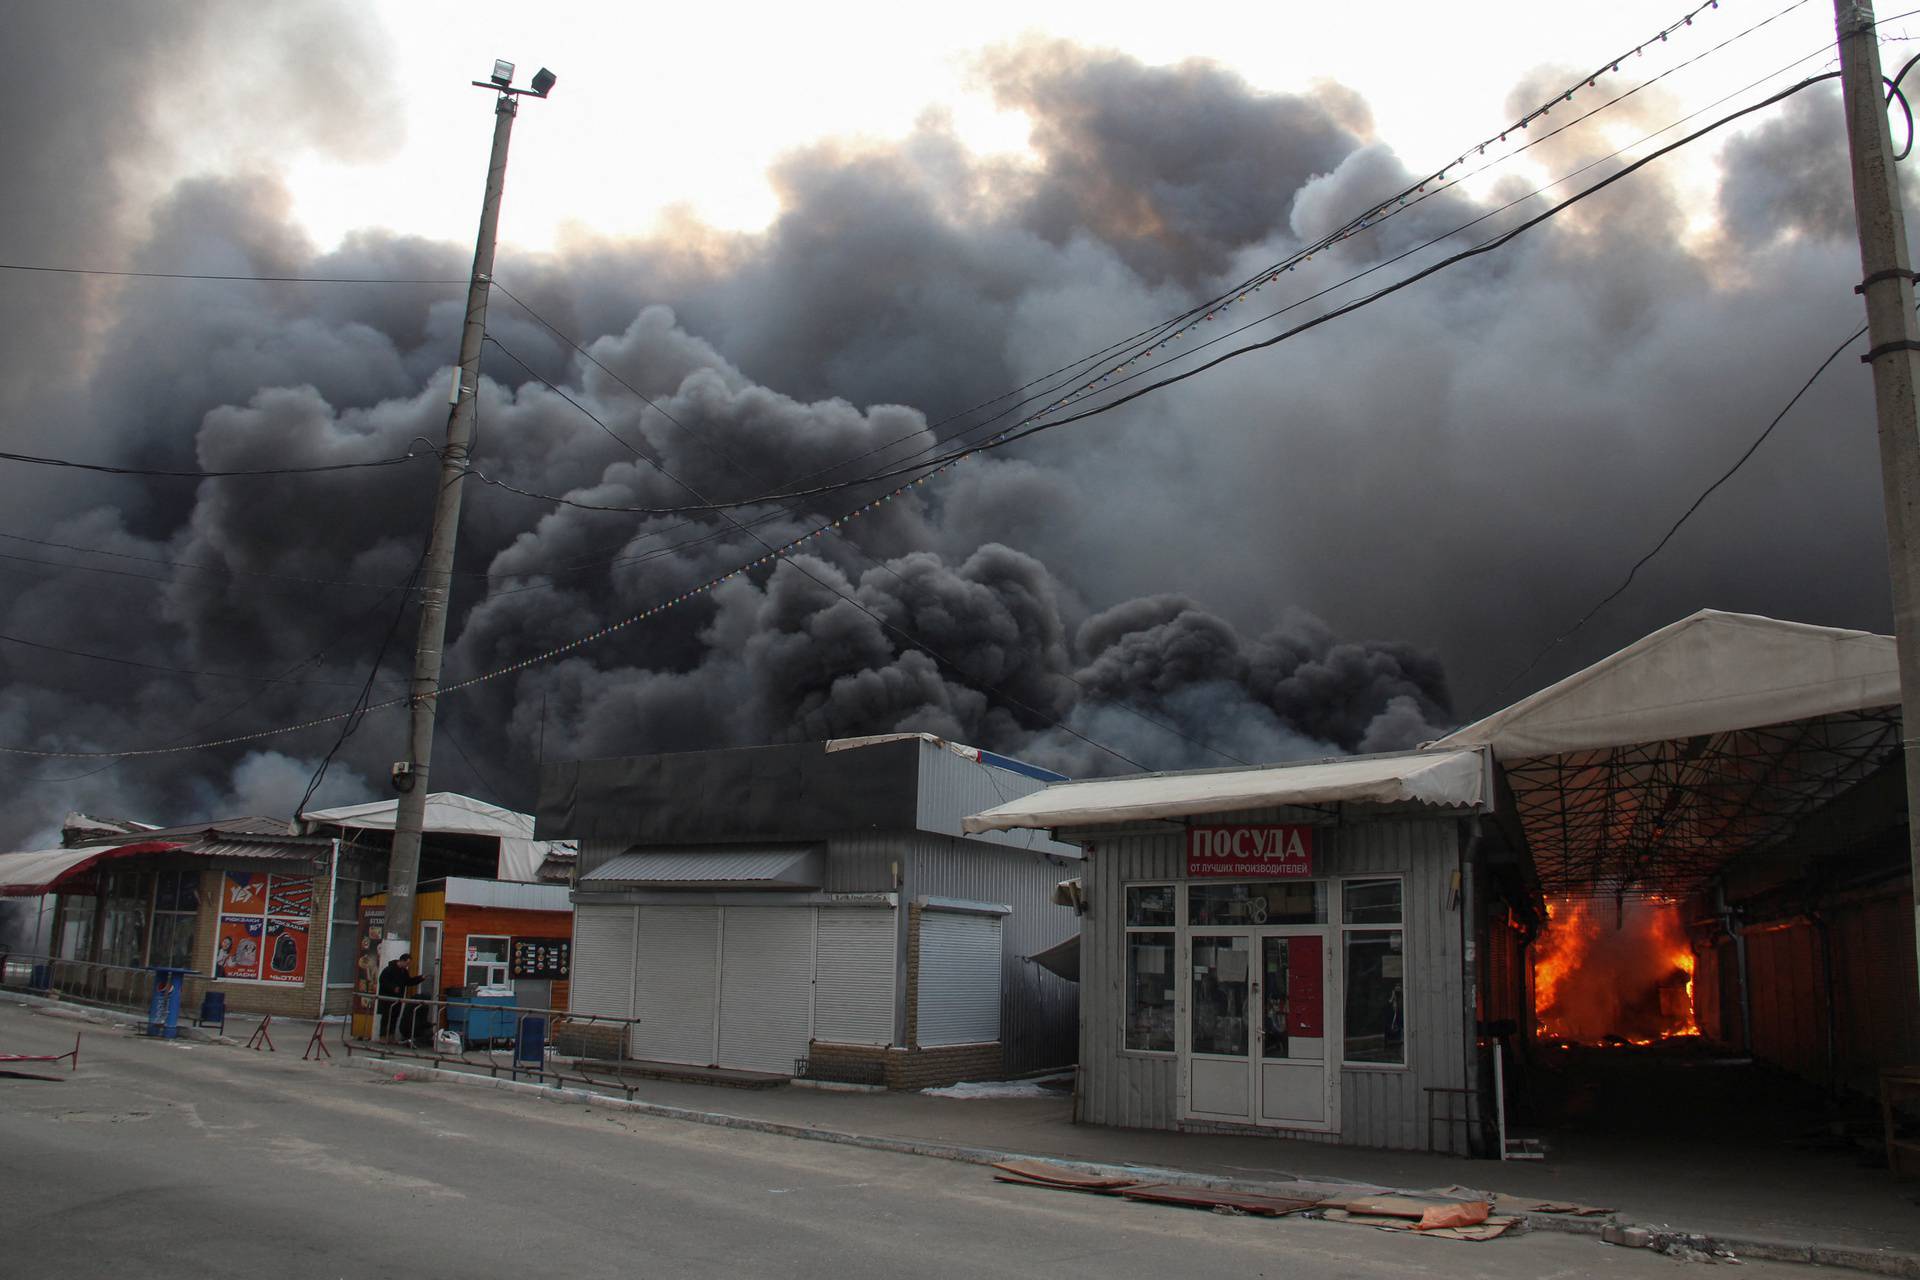 Ukrainian biggest market Barabashovo is seen in fire  in Kharkiv